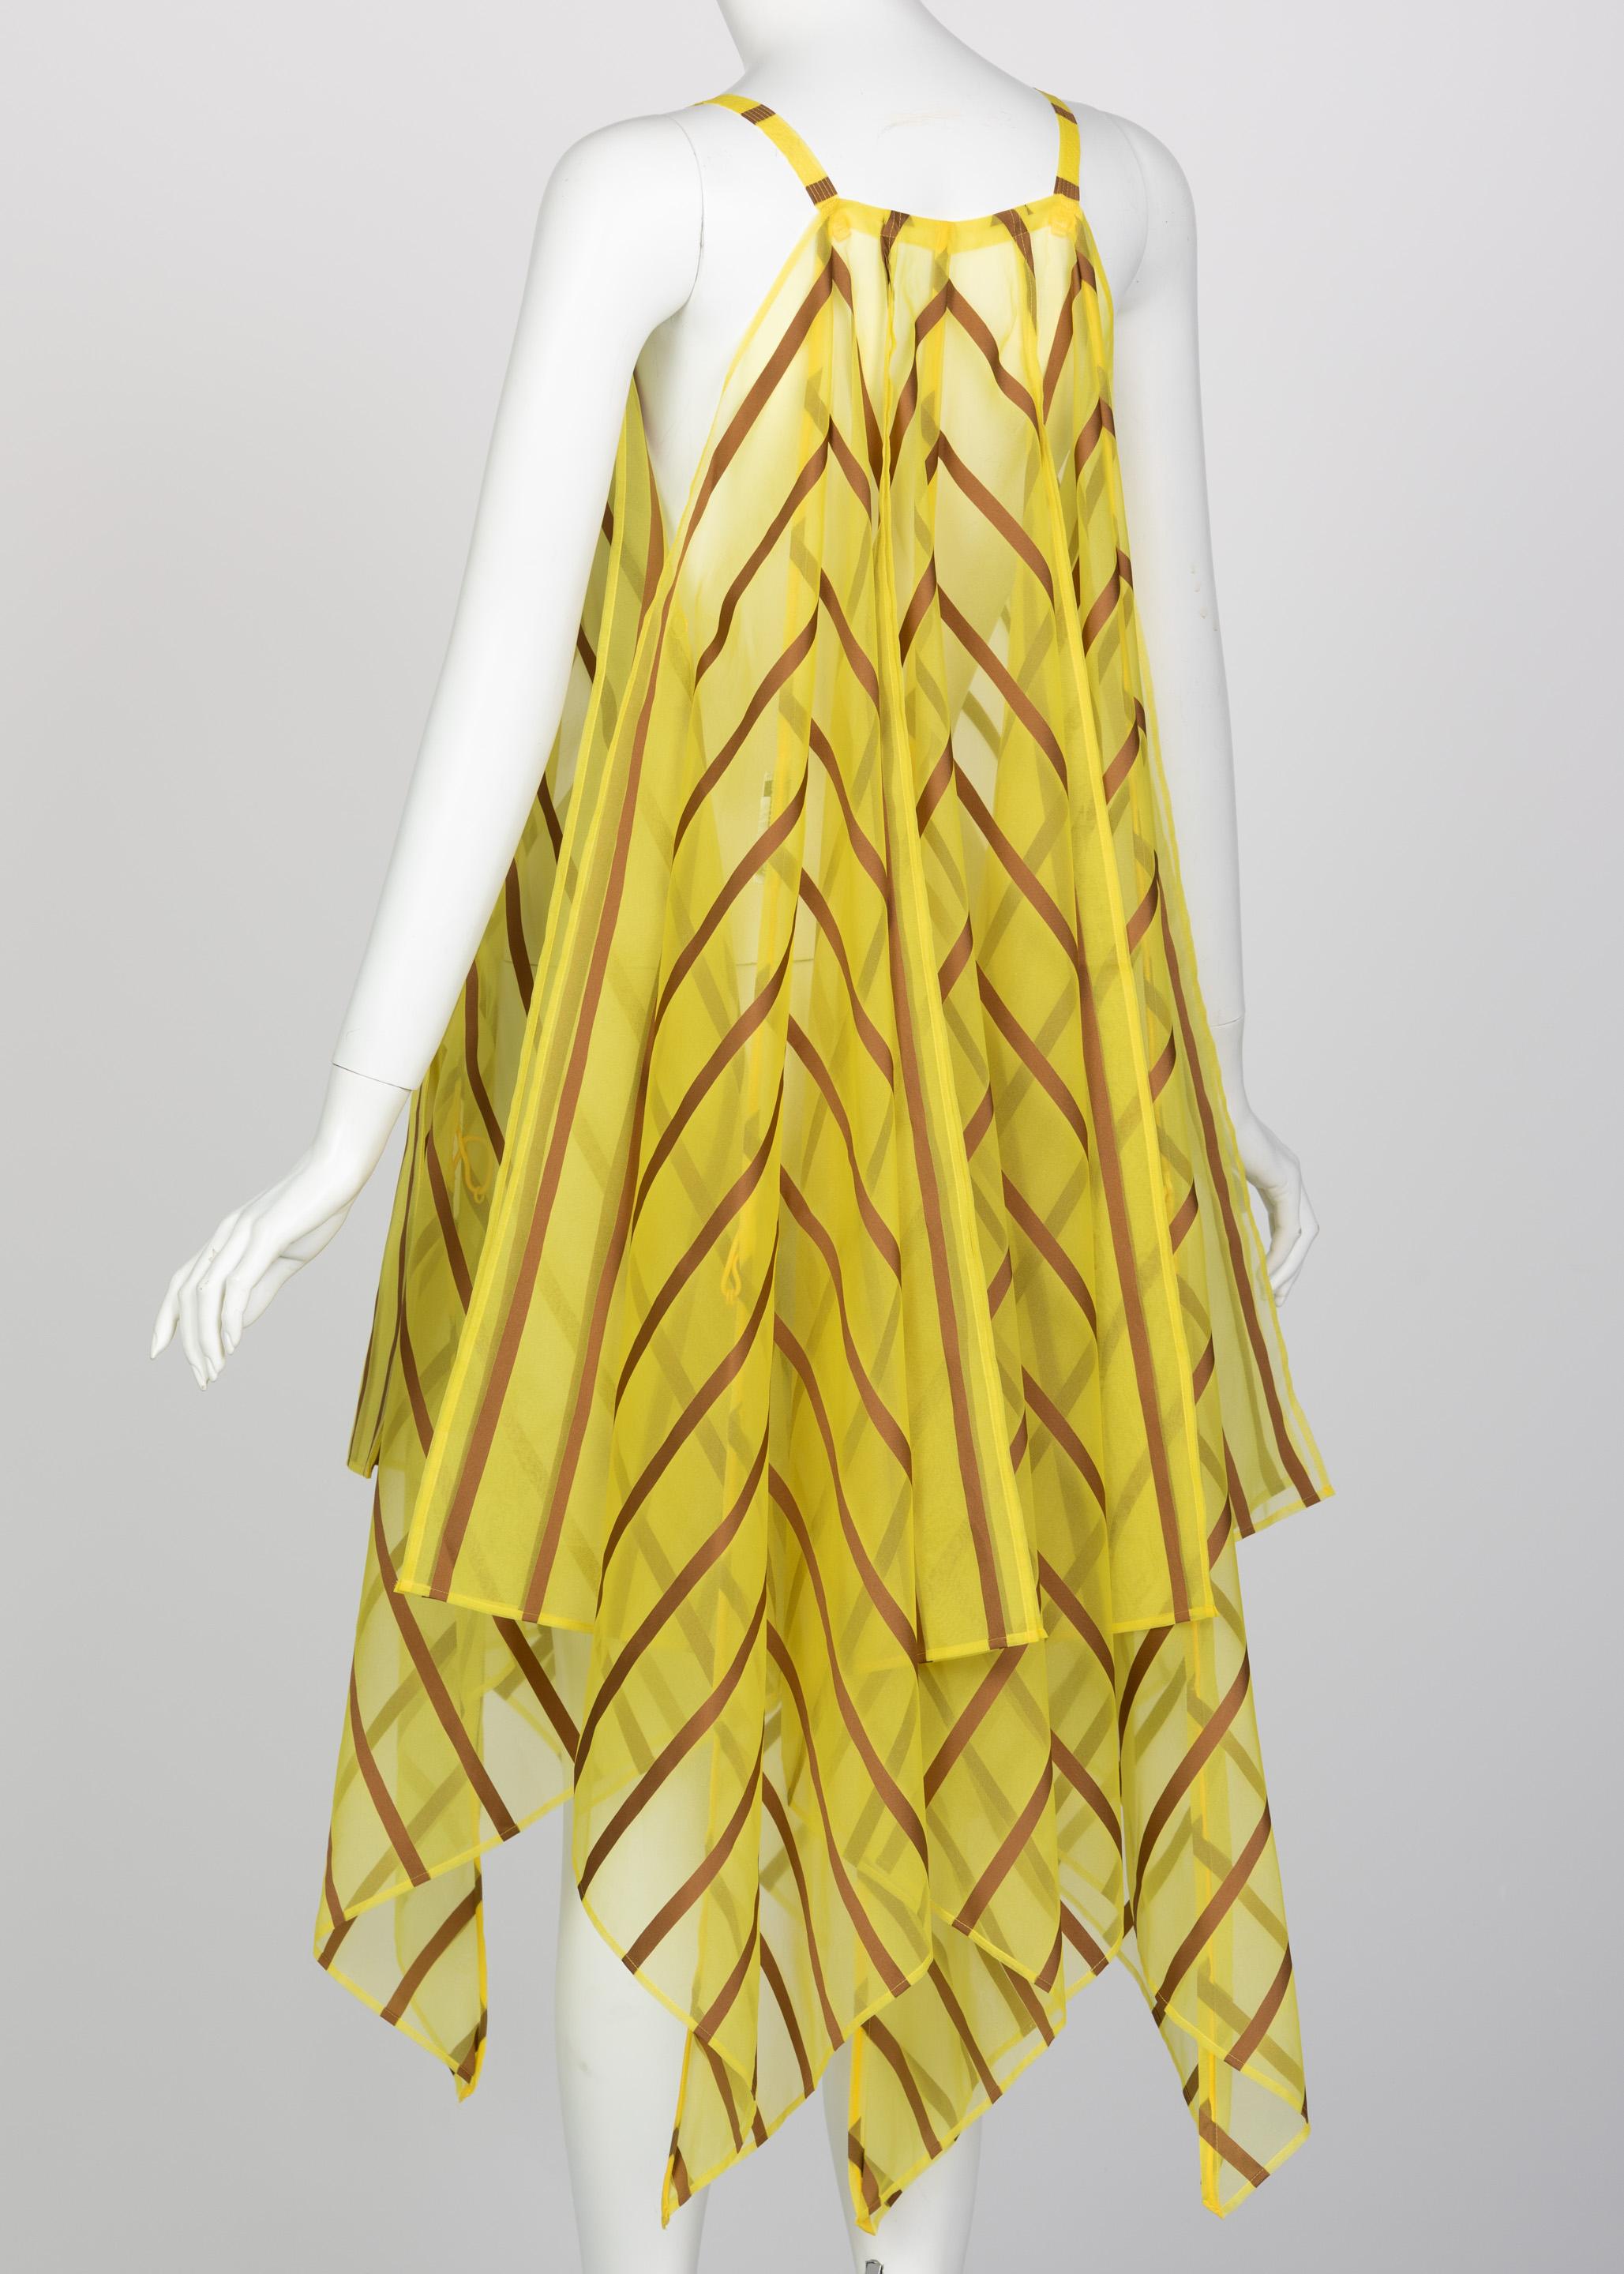 Women's Issey Miyake Yellow Organza Brown Striped Handkerchief Dress